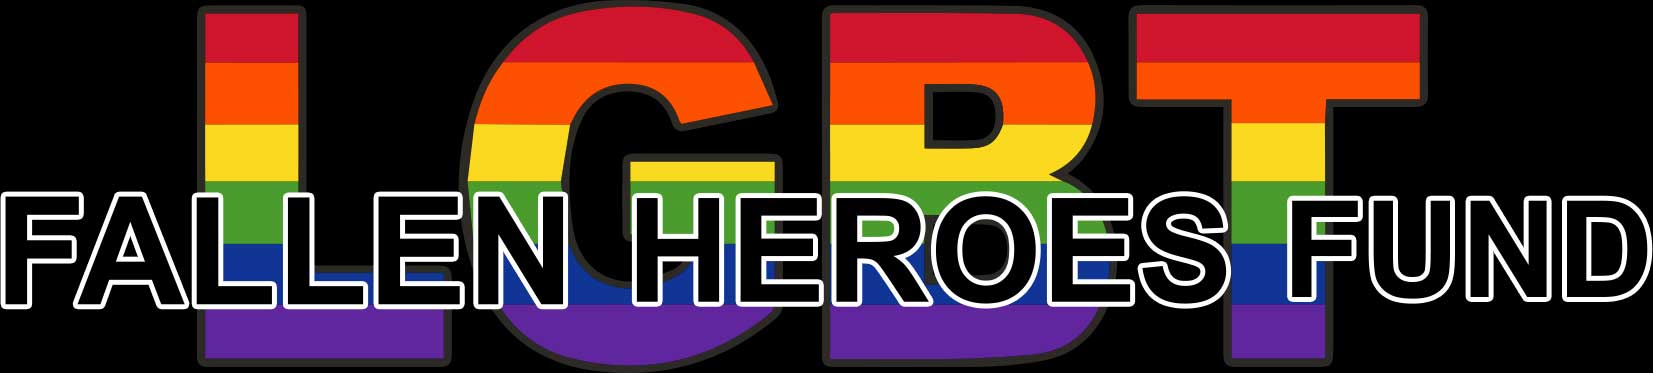 LGBT Fallen Heroes Fund